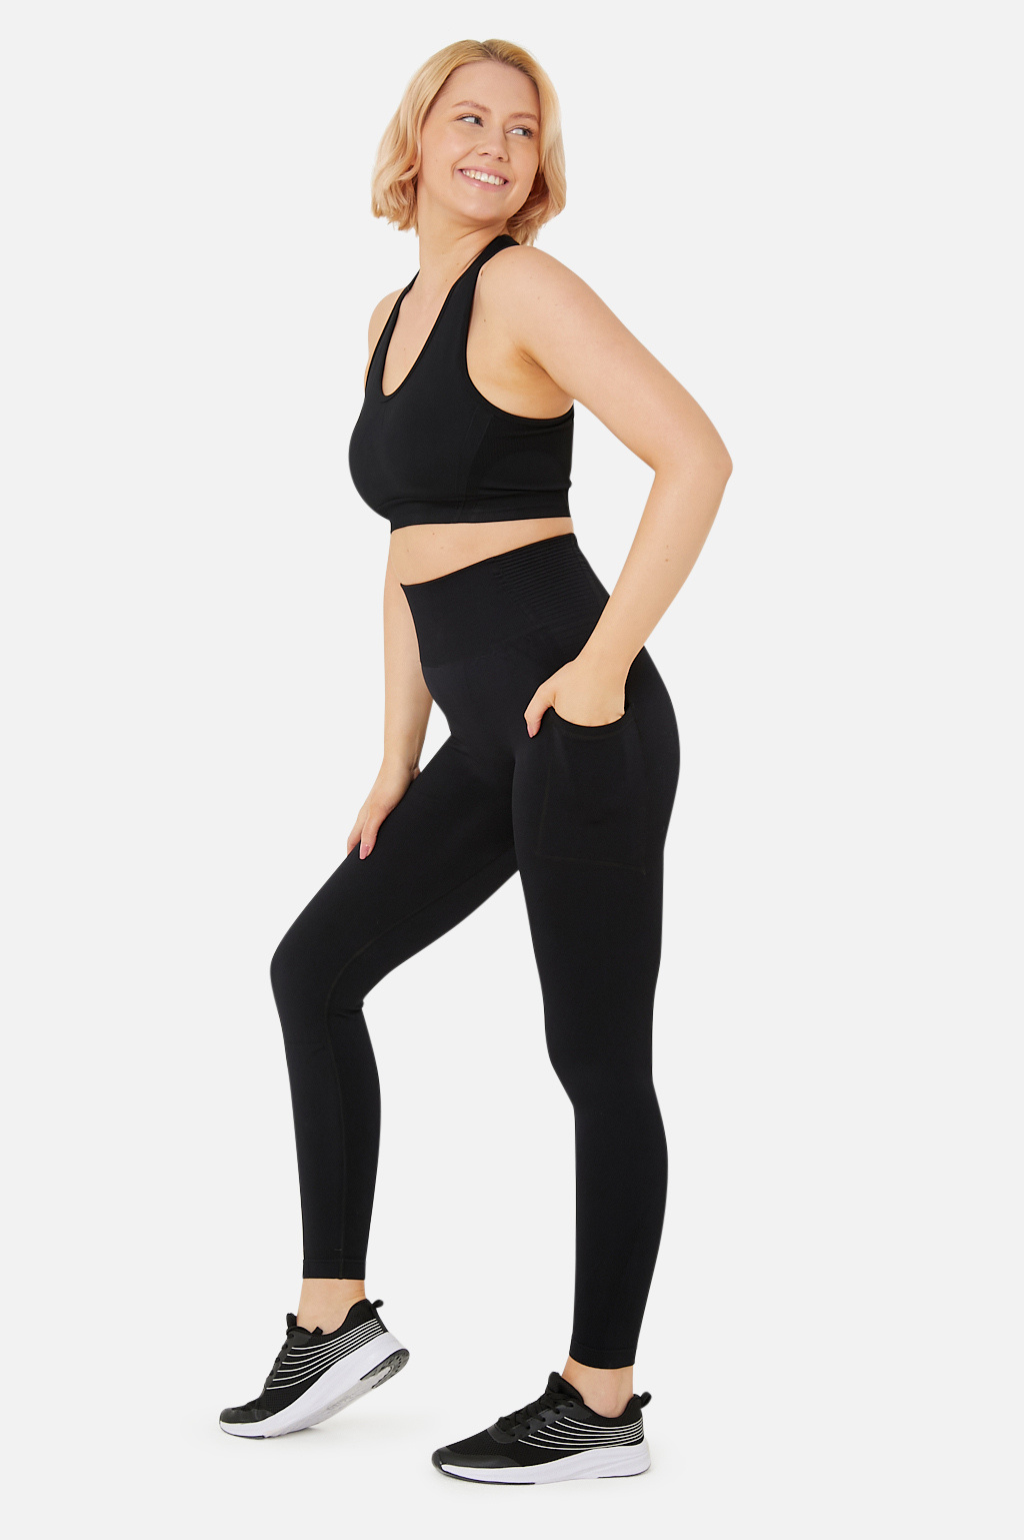 Women's Plus Size High Waist Capris Compression Workout Leggings with Pocket  22